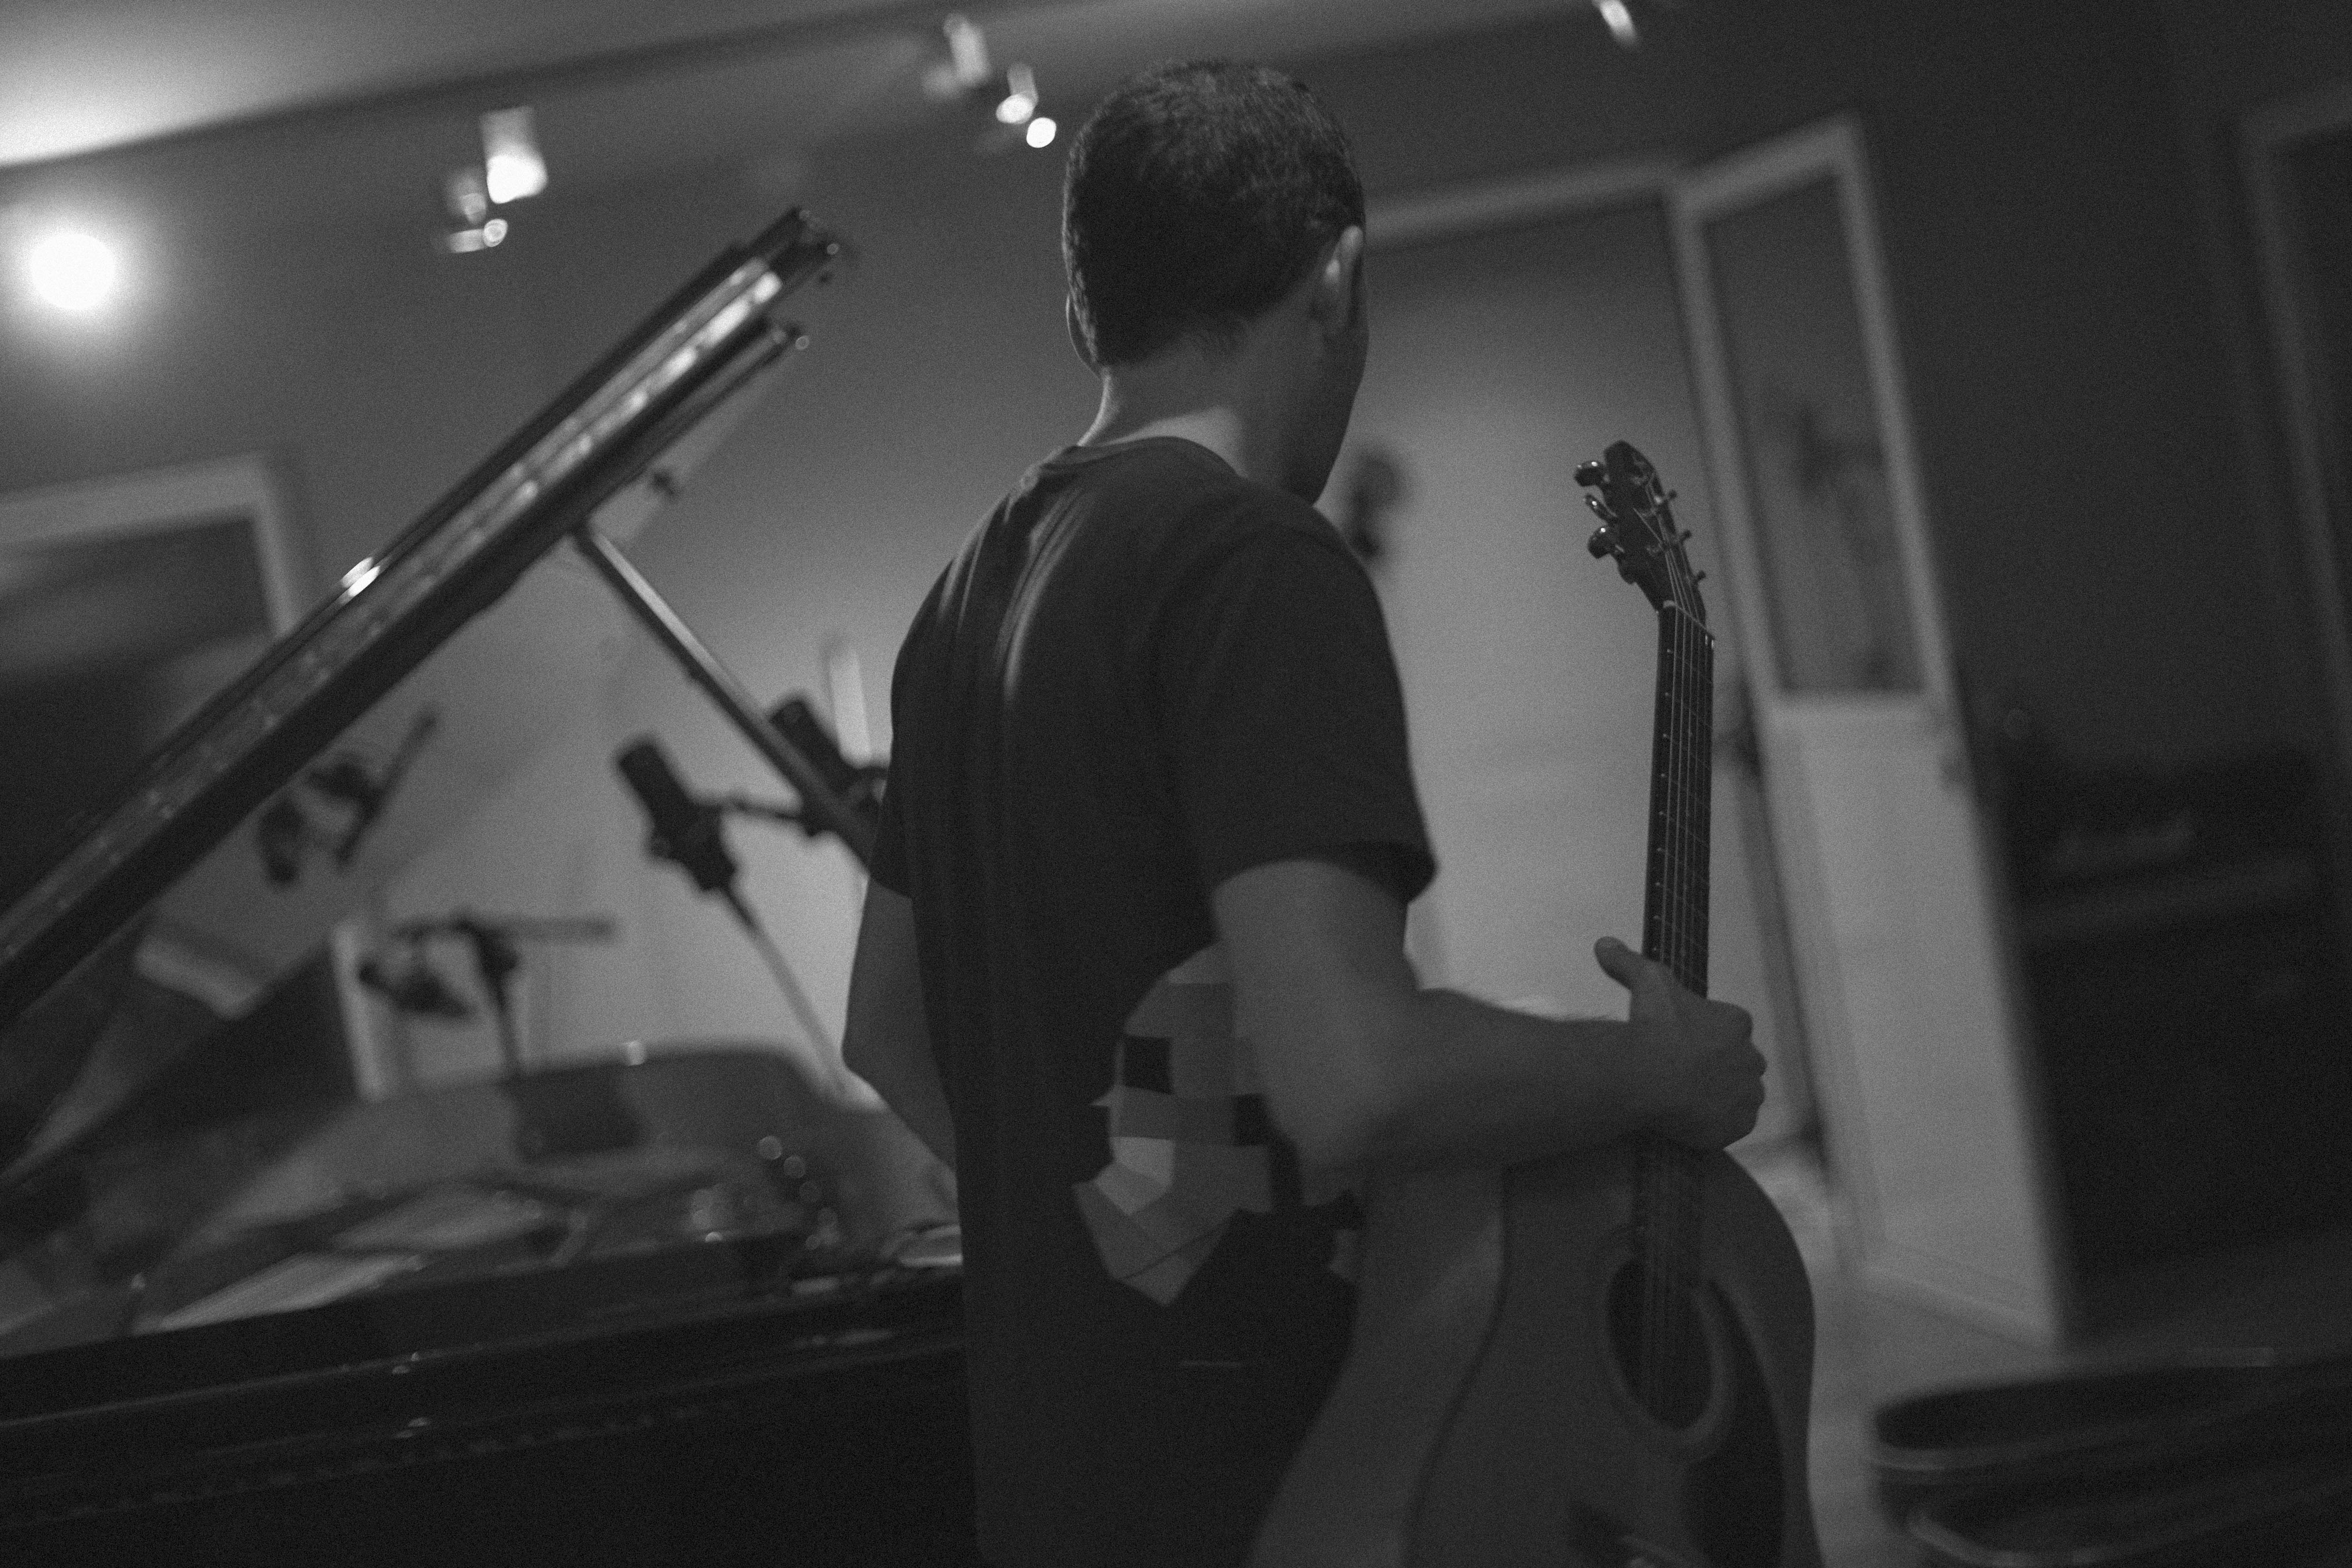 Pablo Pareja holding a guitar at a recording studio